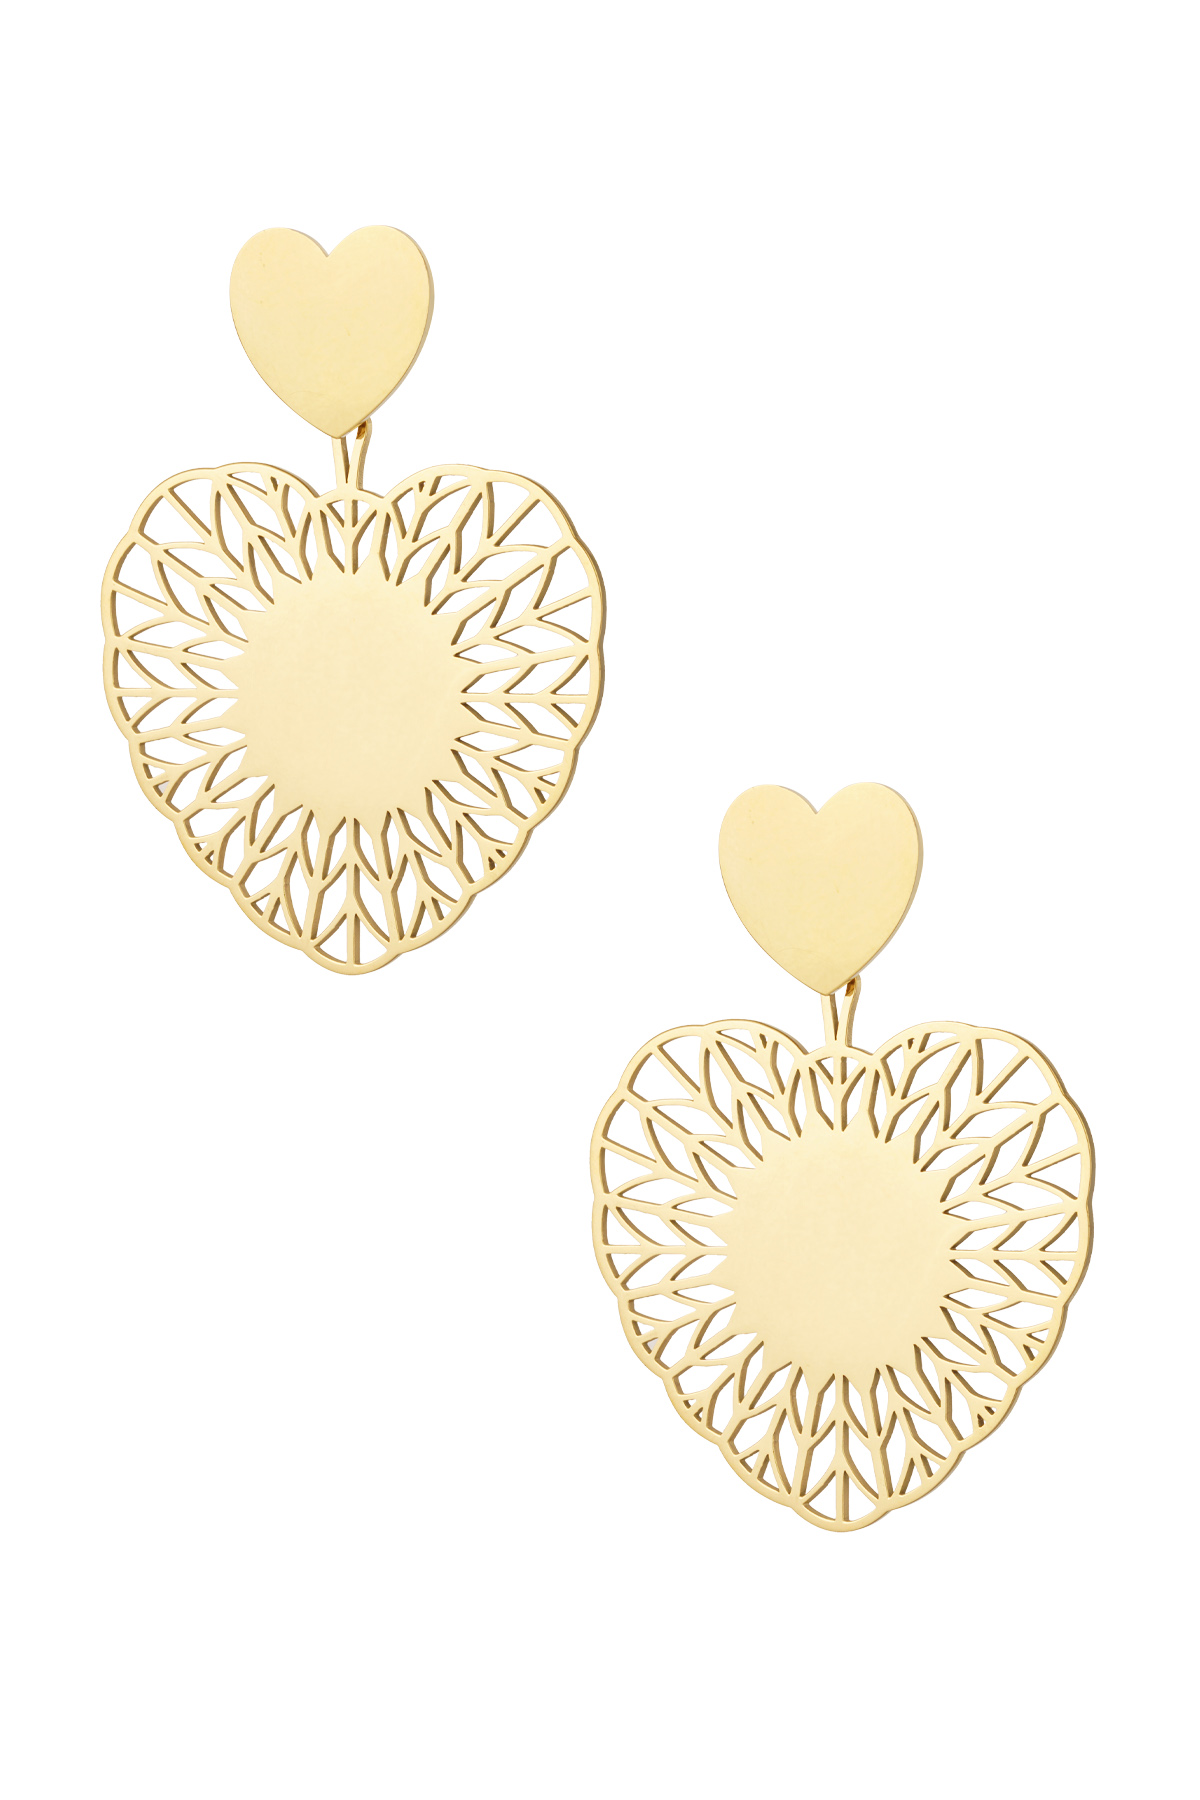 Earrings heart mandela - gold